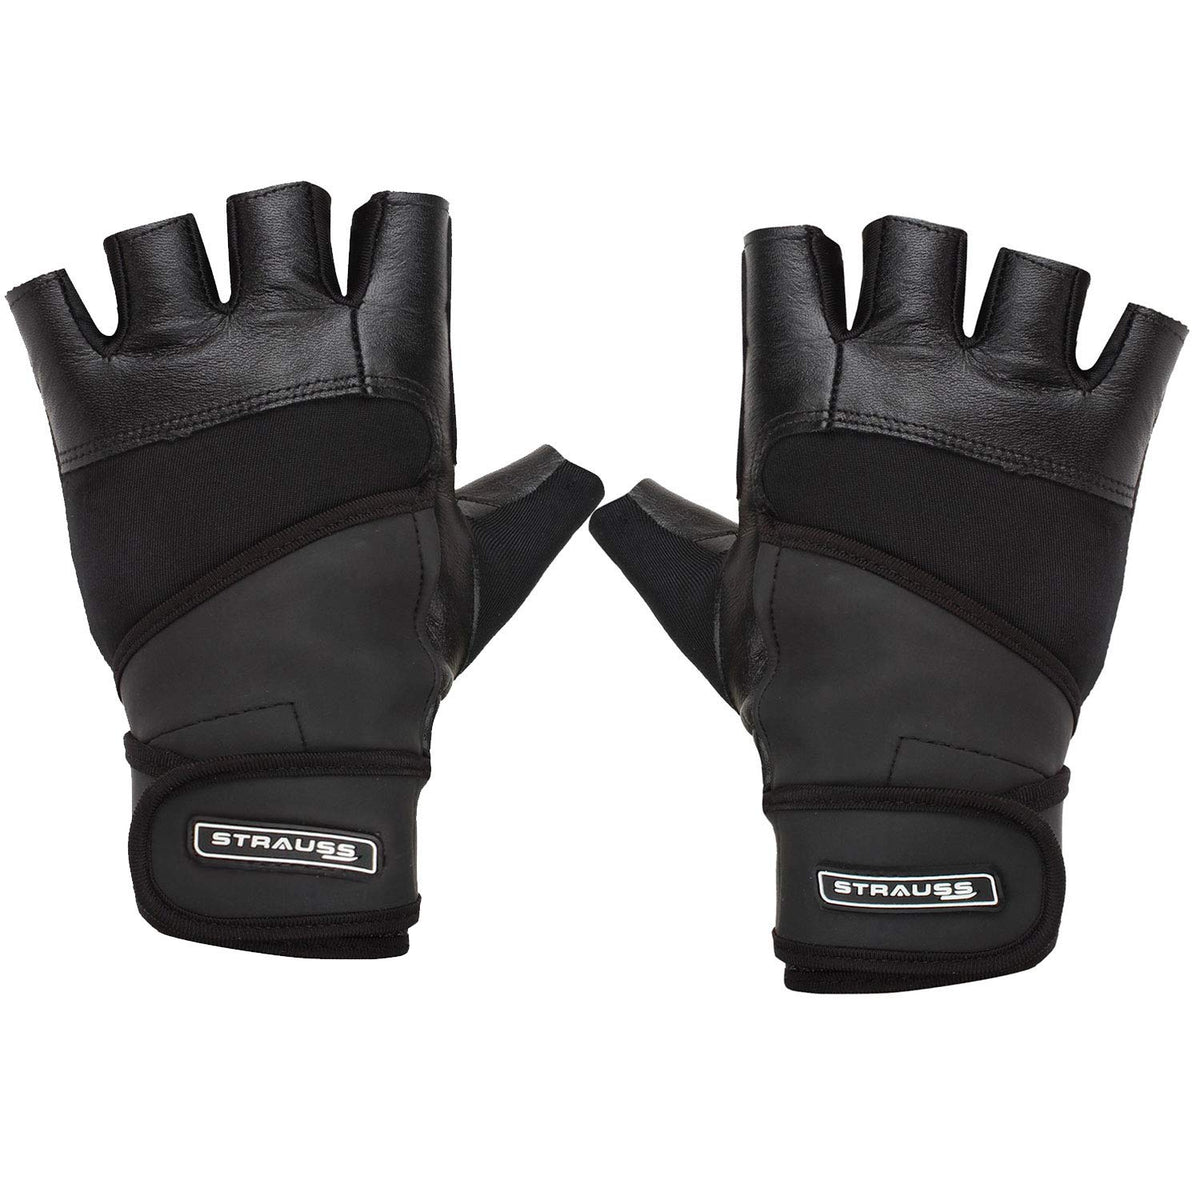 STRAUSS Leather Gym Gloves with Wrist Wrap (Medium)